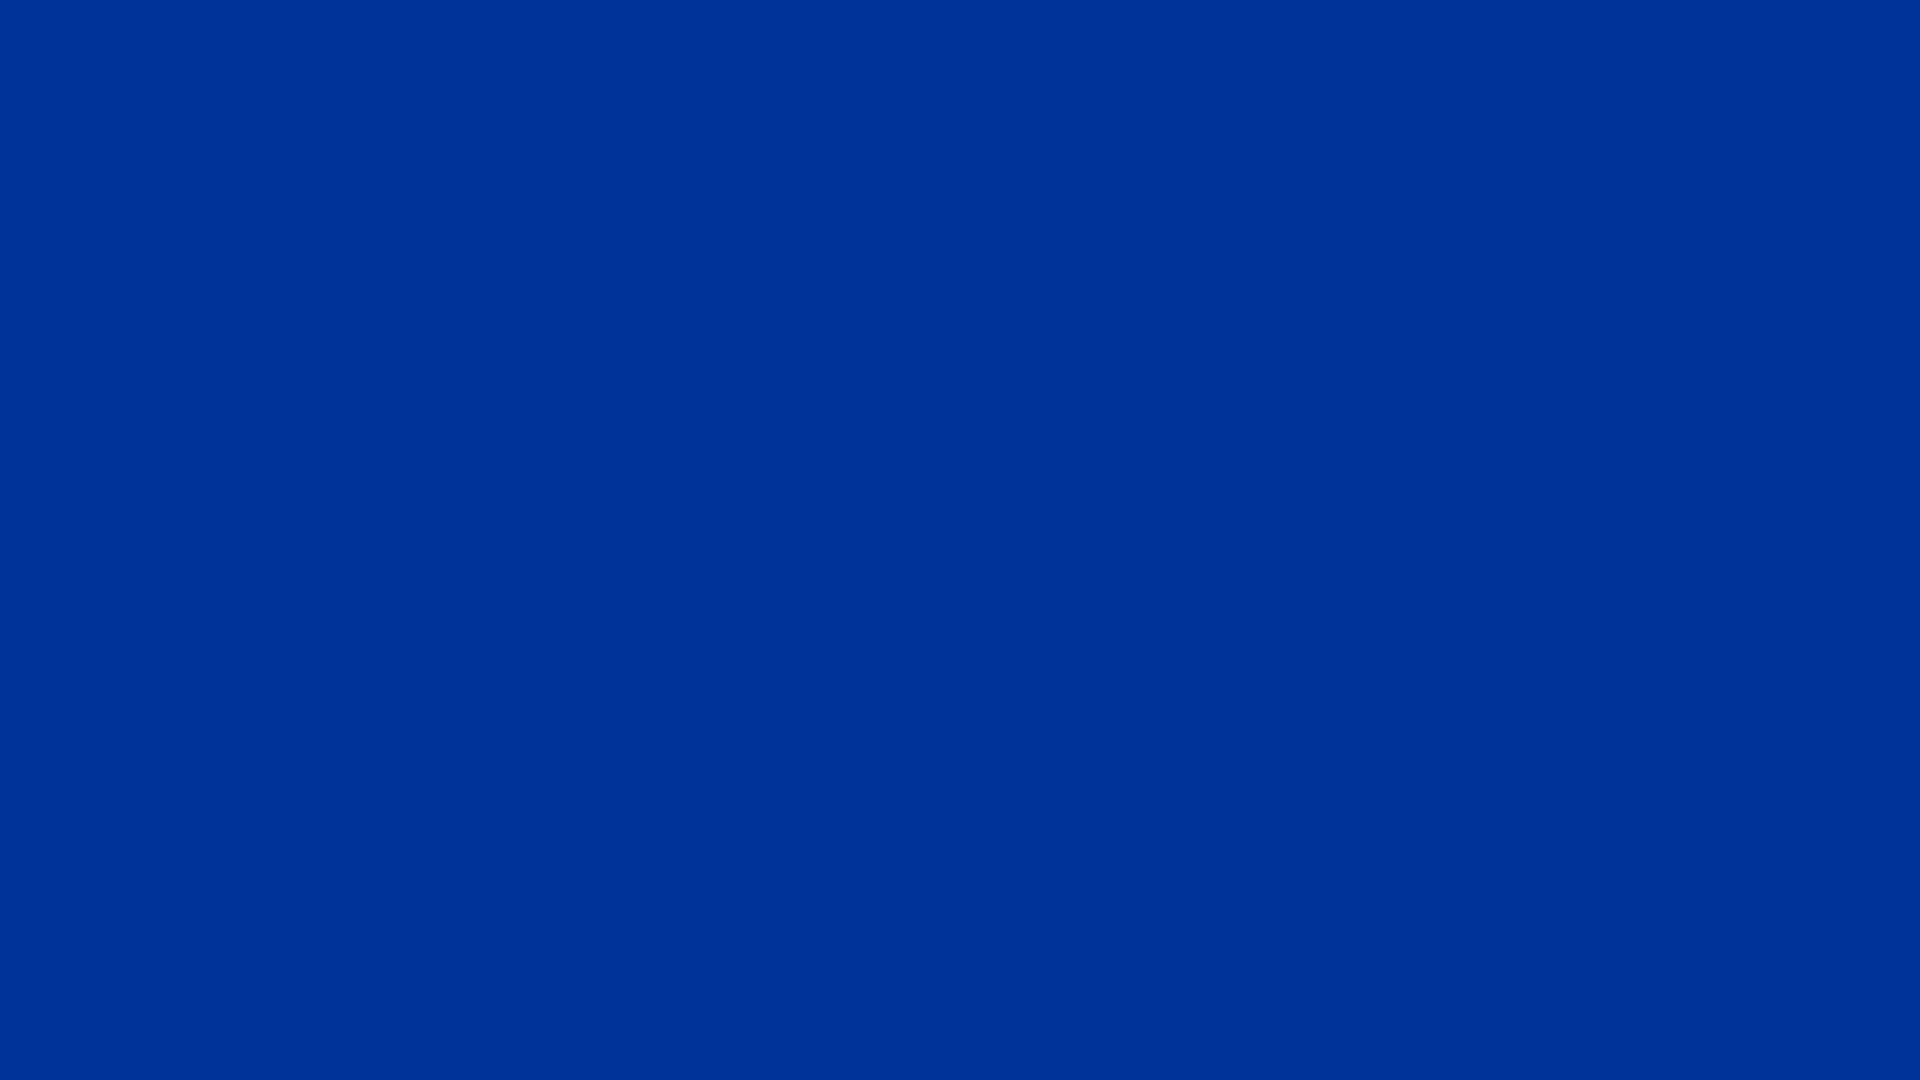 https://www.solidbackgrounds.com/images/1920x1080/1920x1080-smalt-dark-powder-blue-solid-color-background.jpg